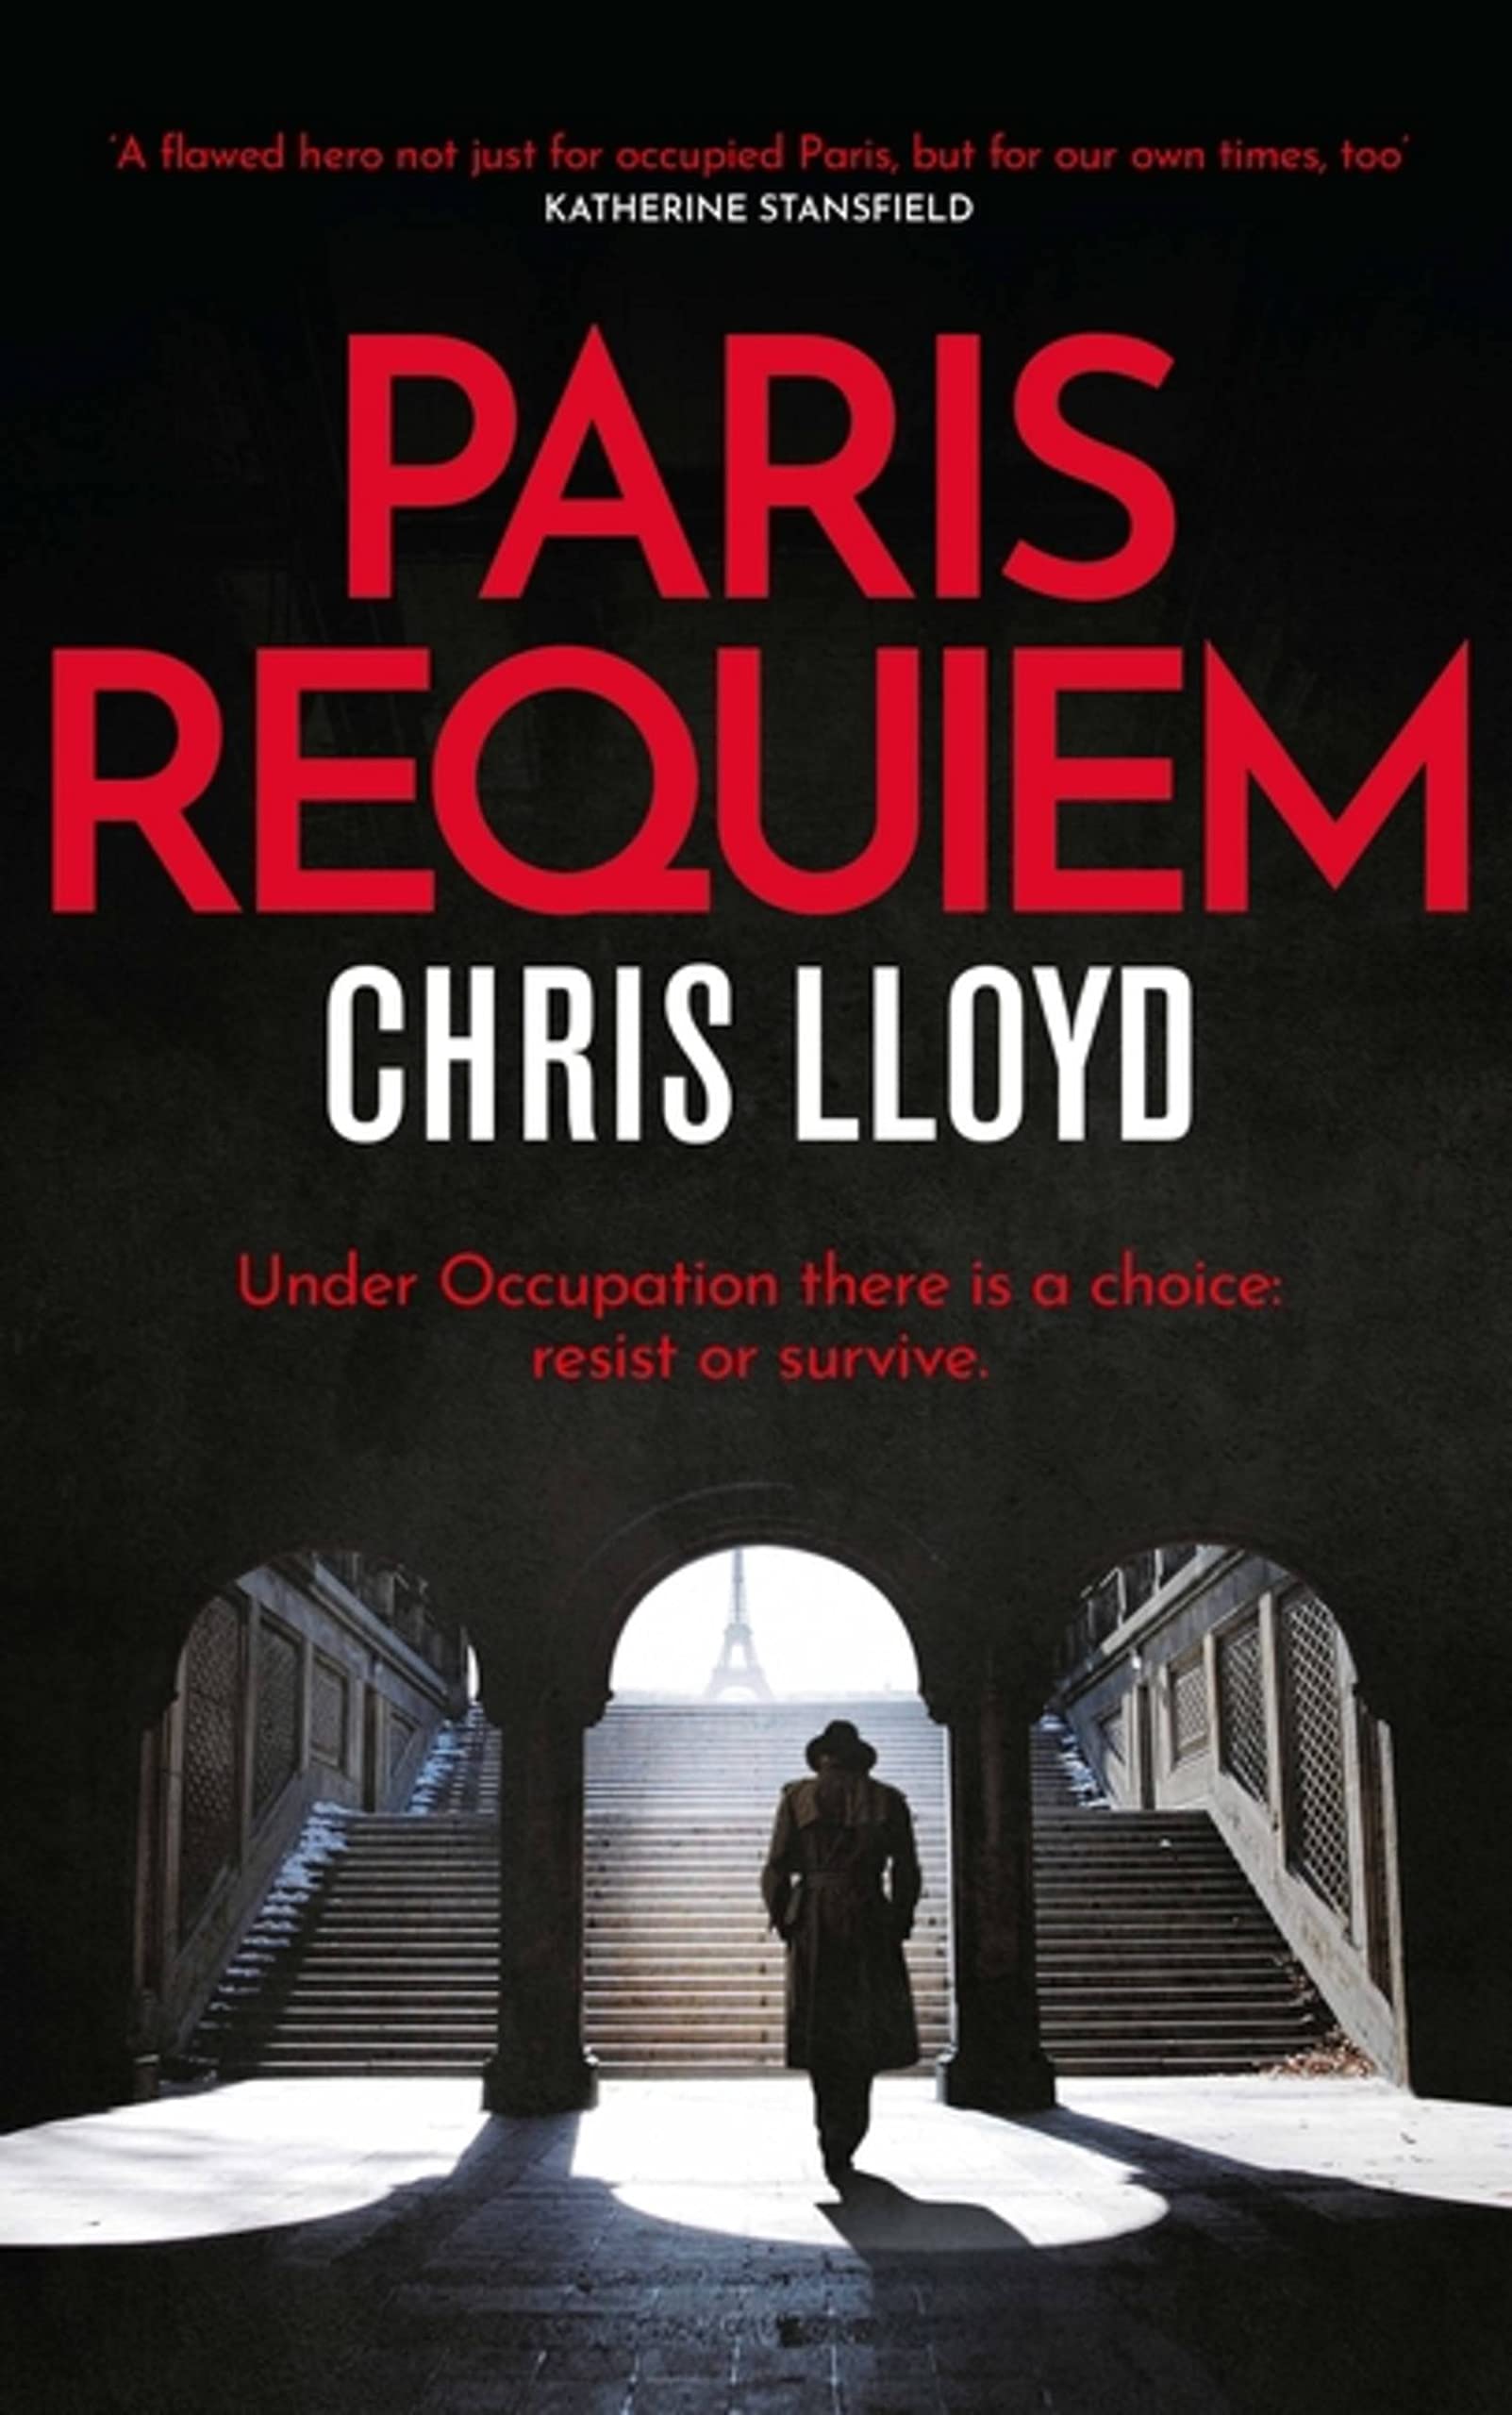 Paris Requiem by Chris Lloyd book